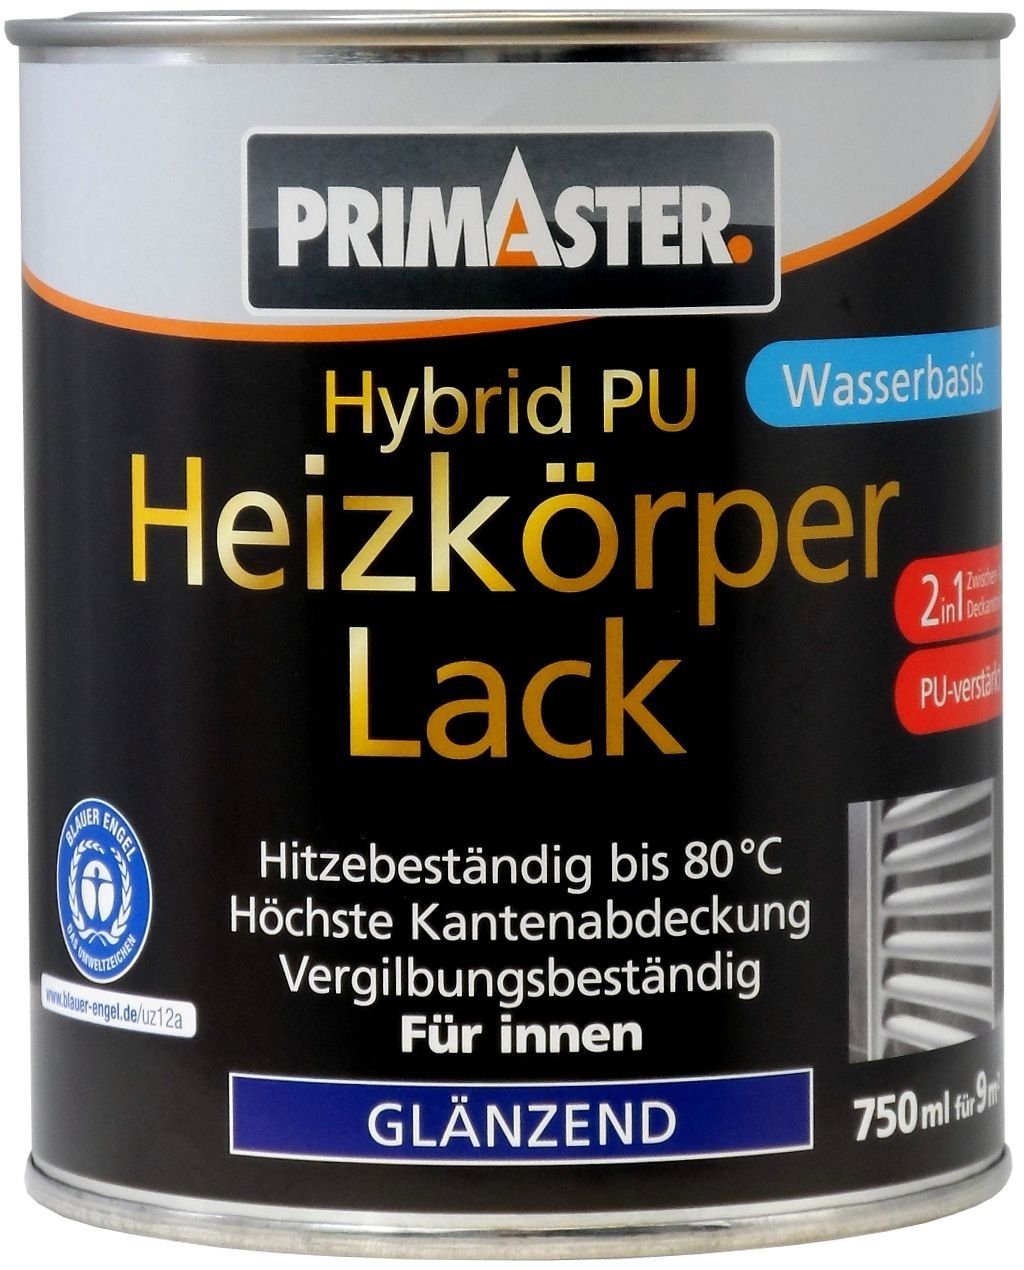 Primaster 750 Hybrid-PU ml Primaster weiß Heizkörperlack Heizkörperlack